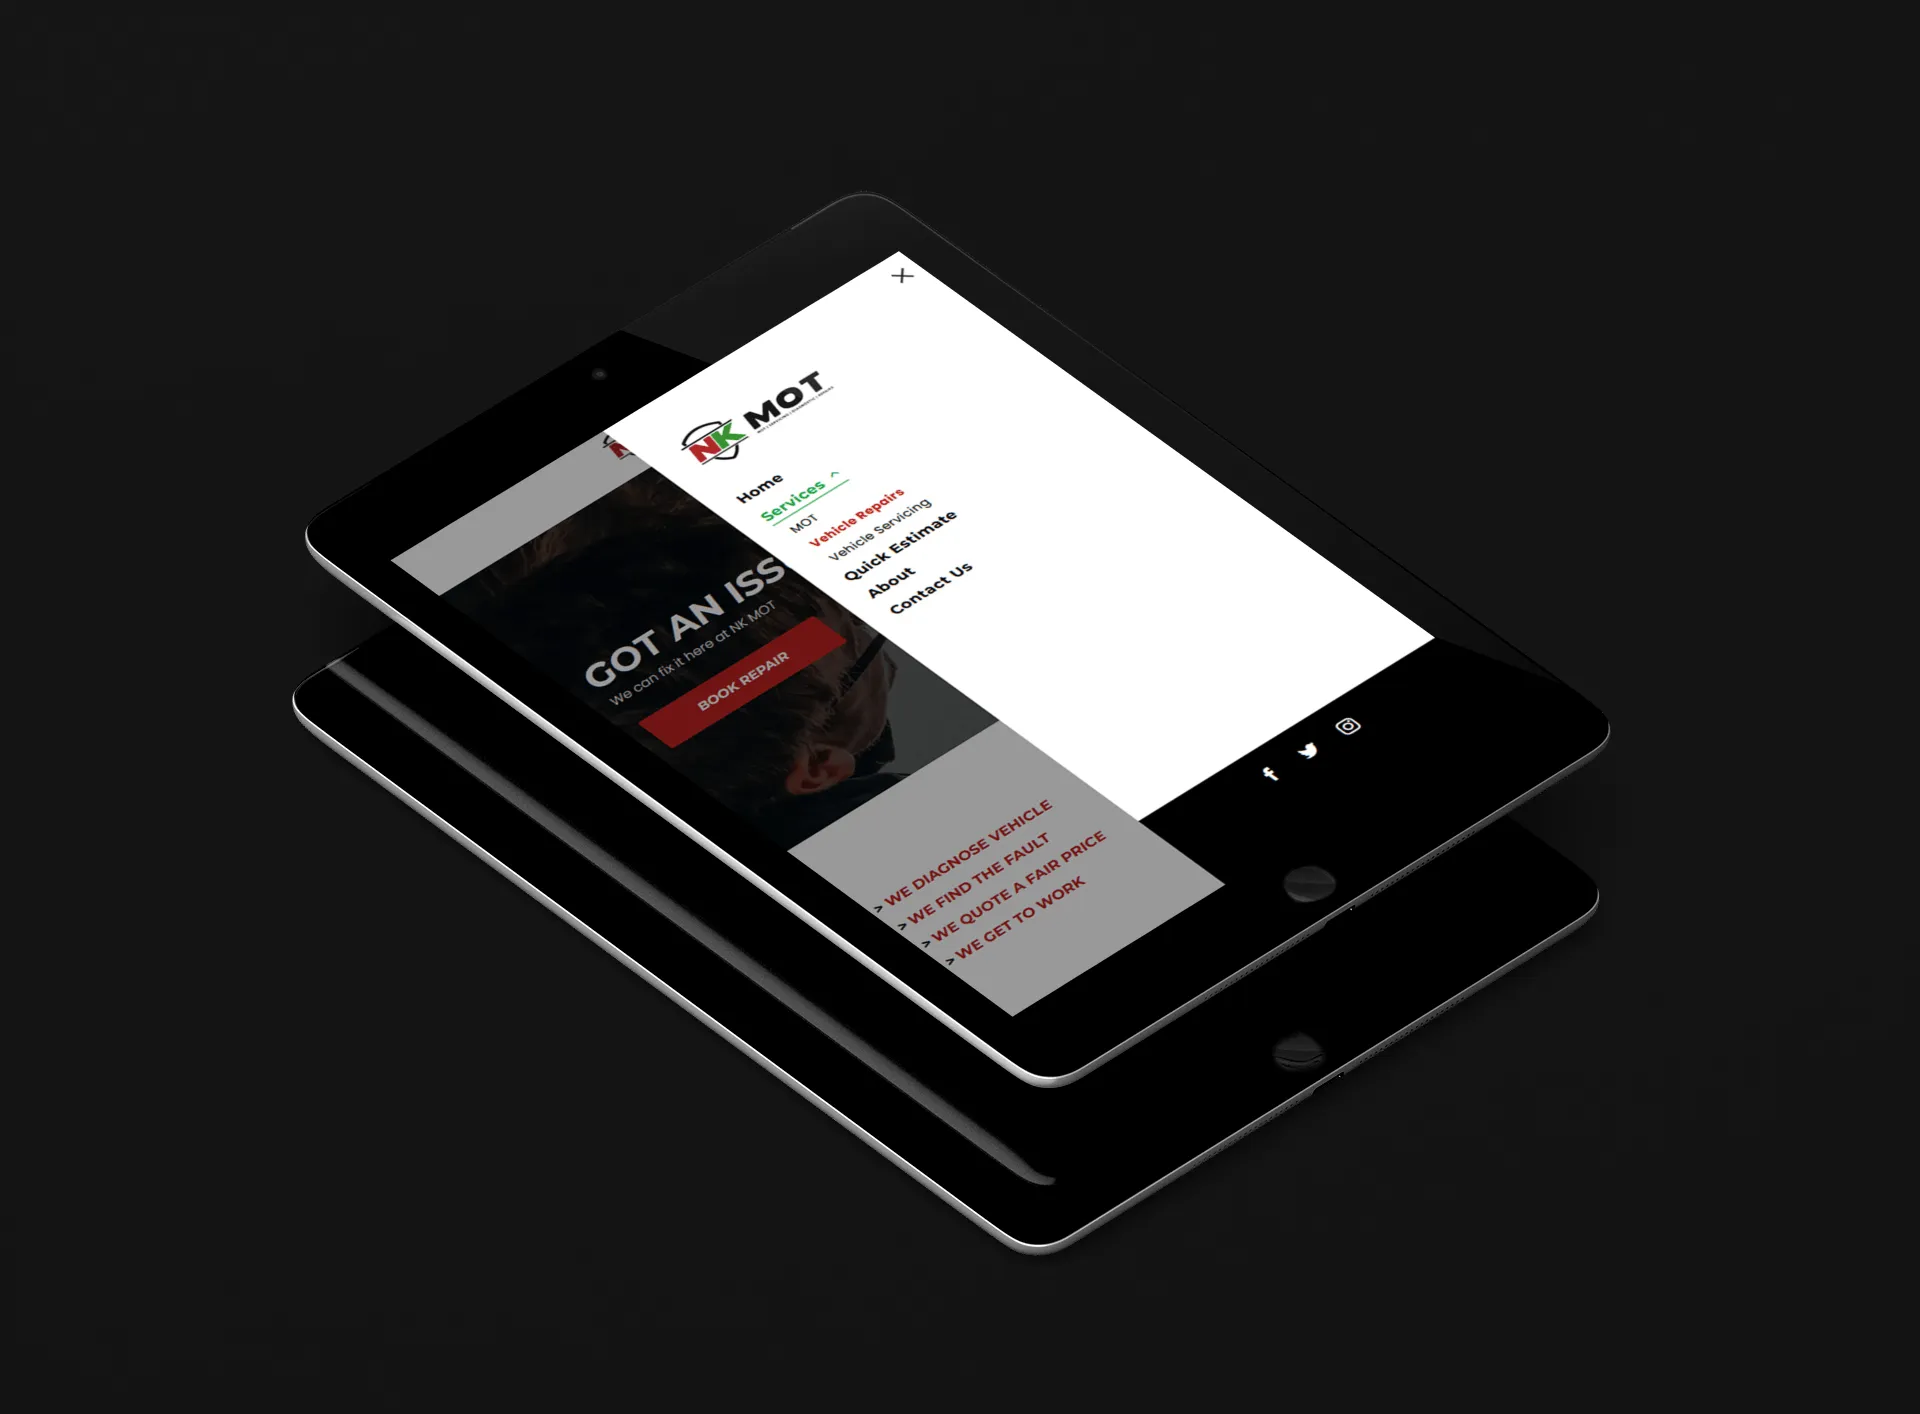 An Ipad displaying the NK Mot responsive website and navigation